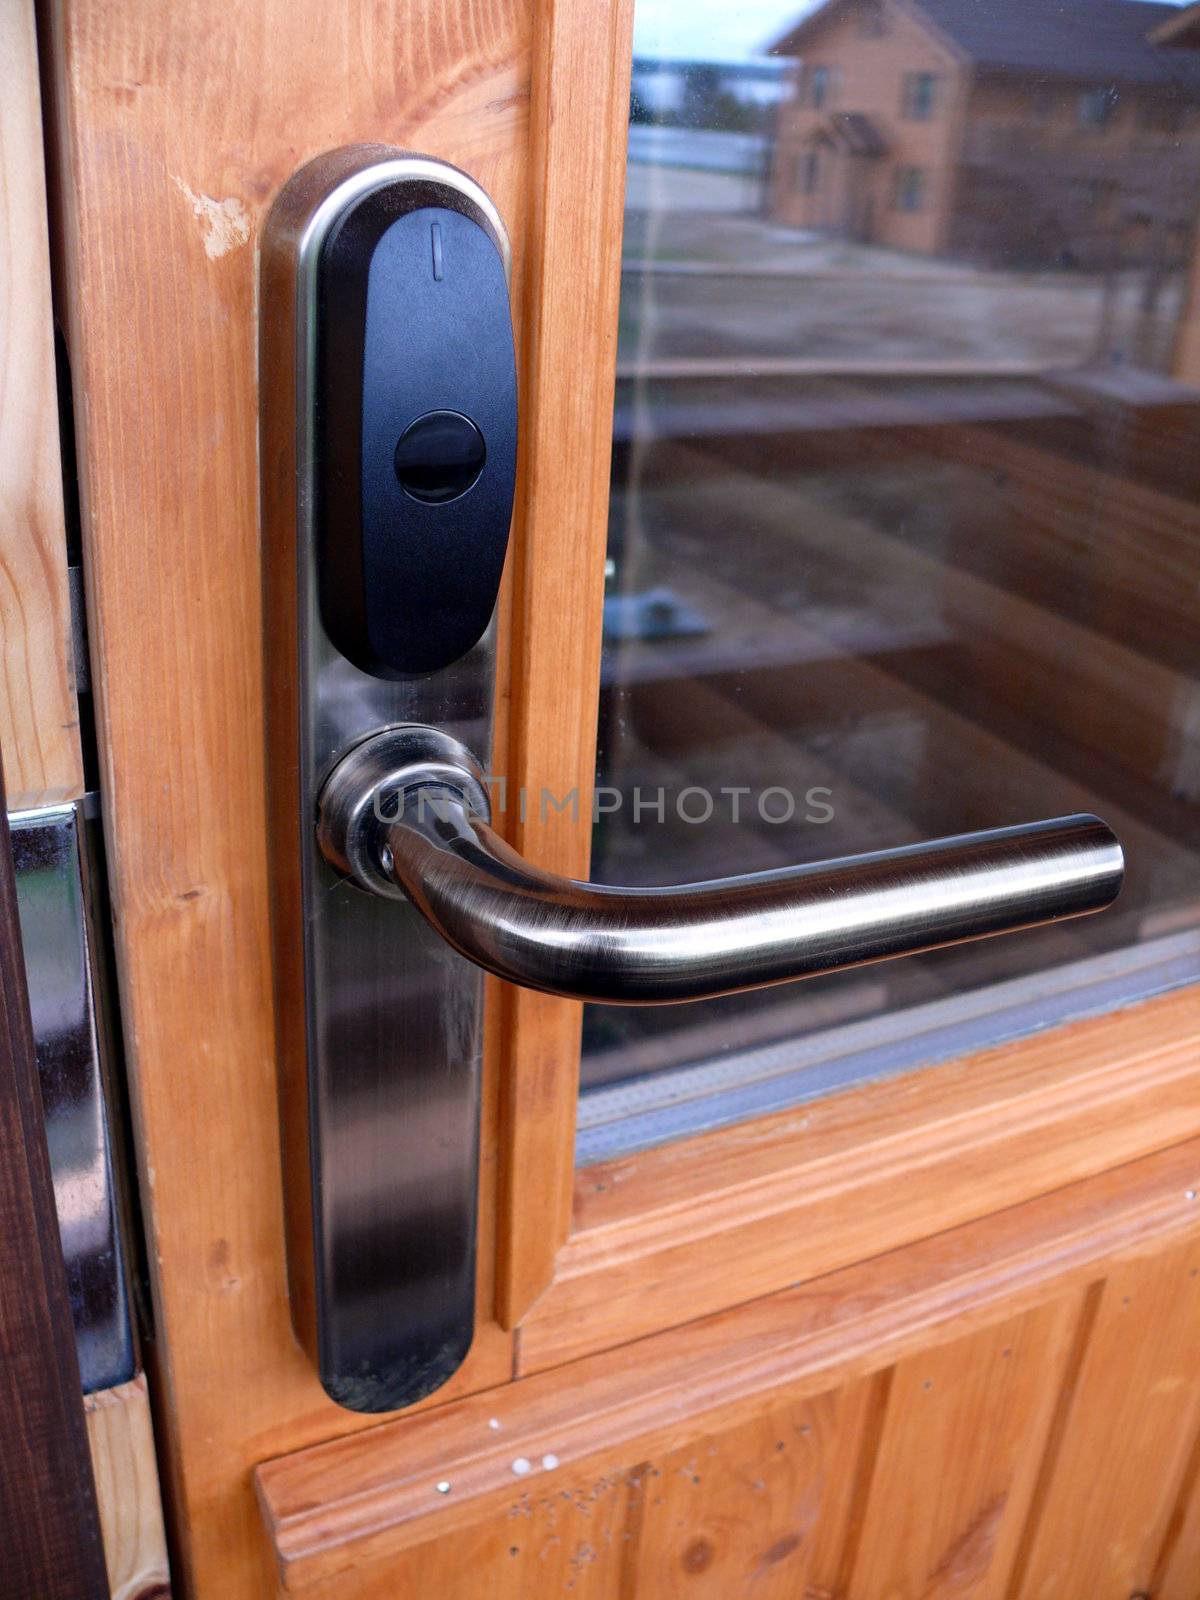 Locked door with keycard identification system by Stoyanov